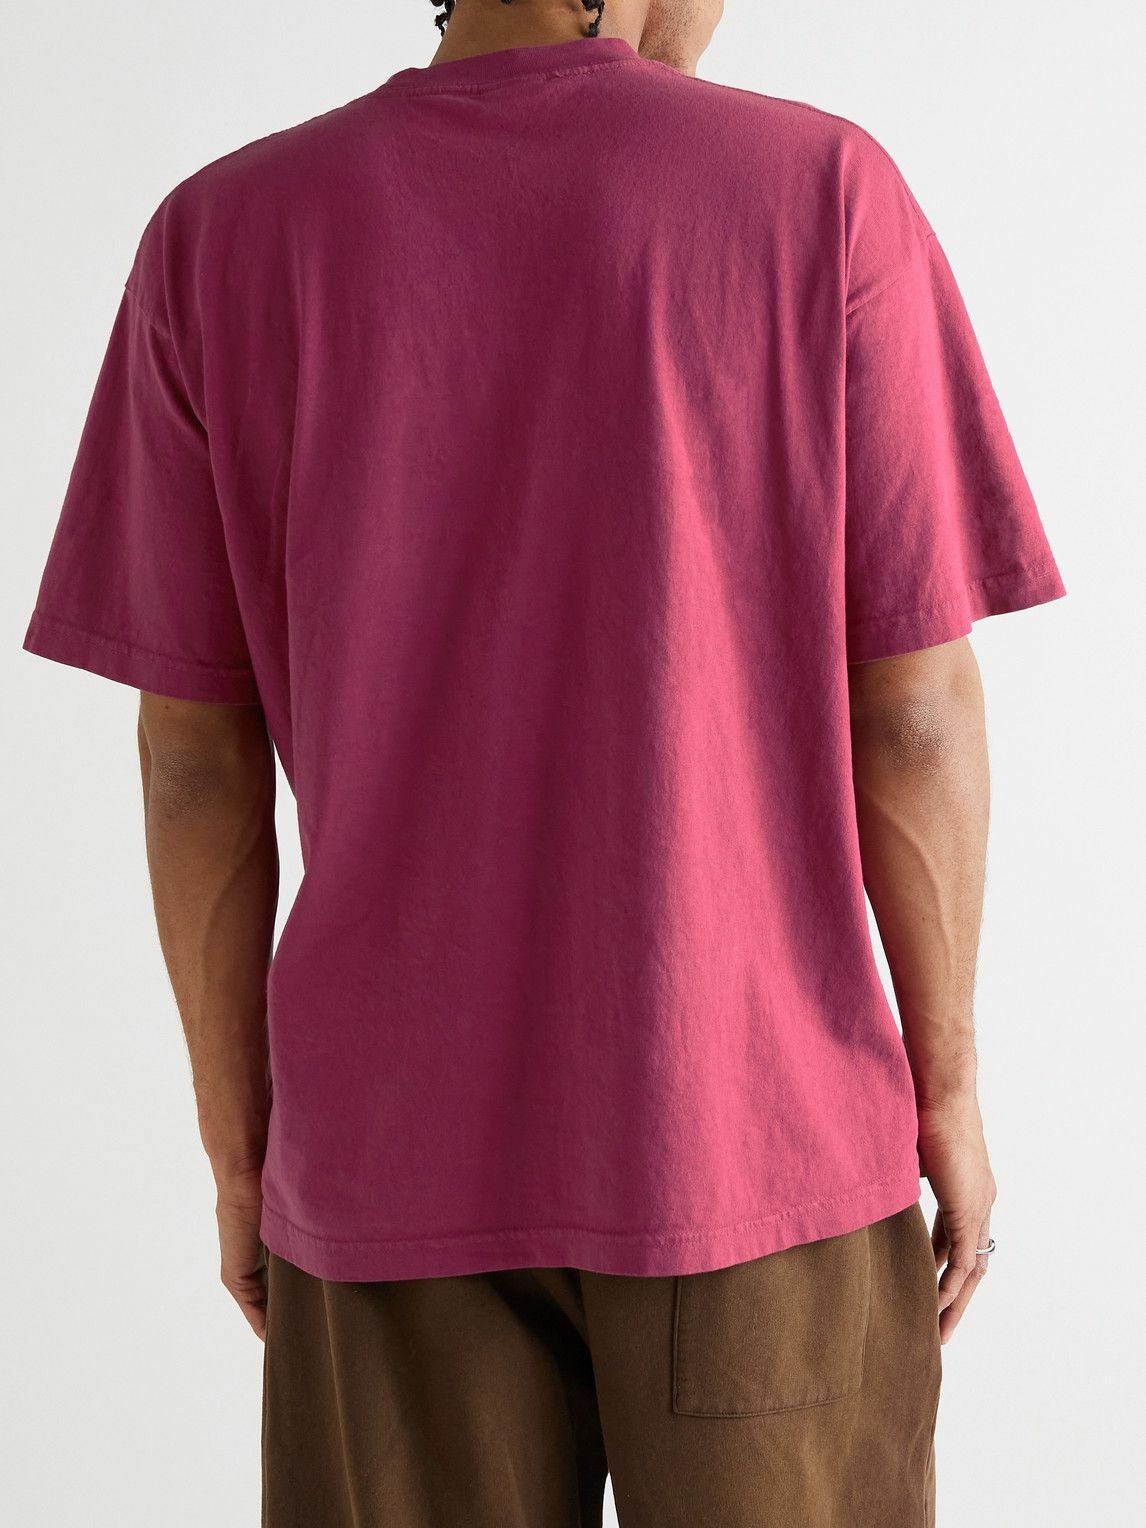 Stray Rats - 86 Printed Cotton-Jersey T-Shirt - Purple